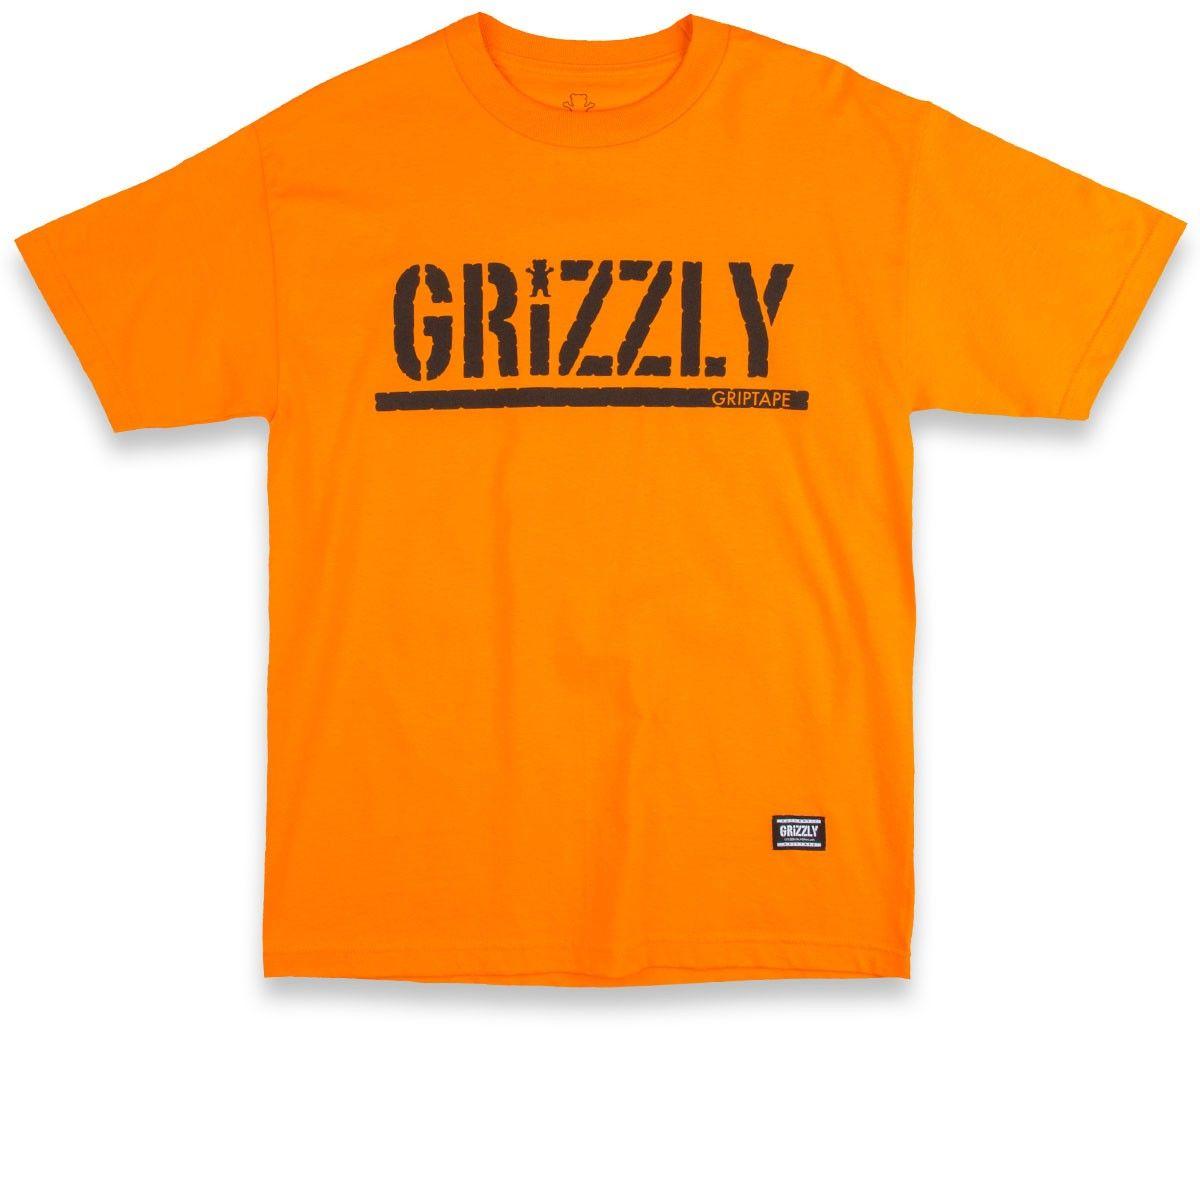 Grizzly Grip Logo - Grizzly Grip OG Stamp Logo T-Shirt - Orange